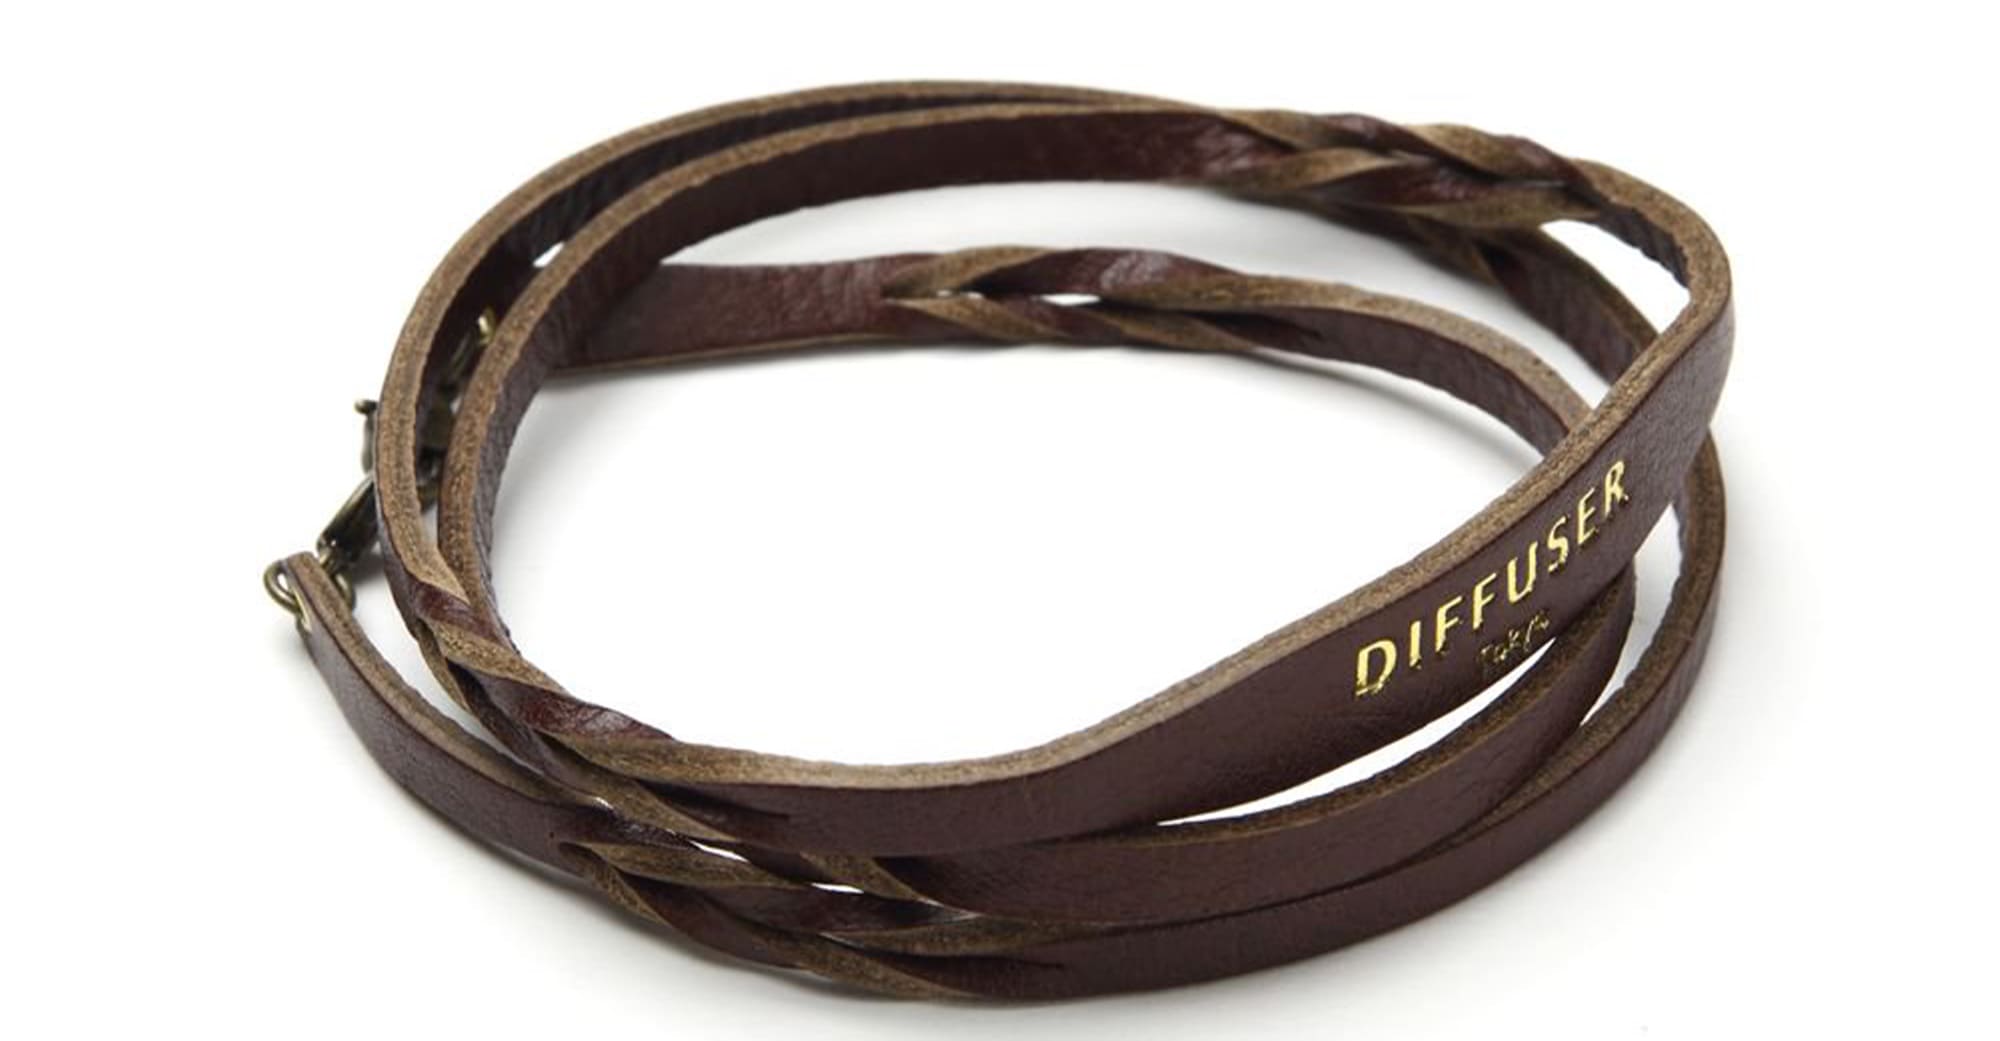 Twisted leather soft bracelet cord - dark brown